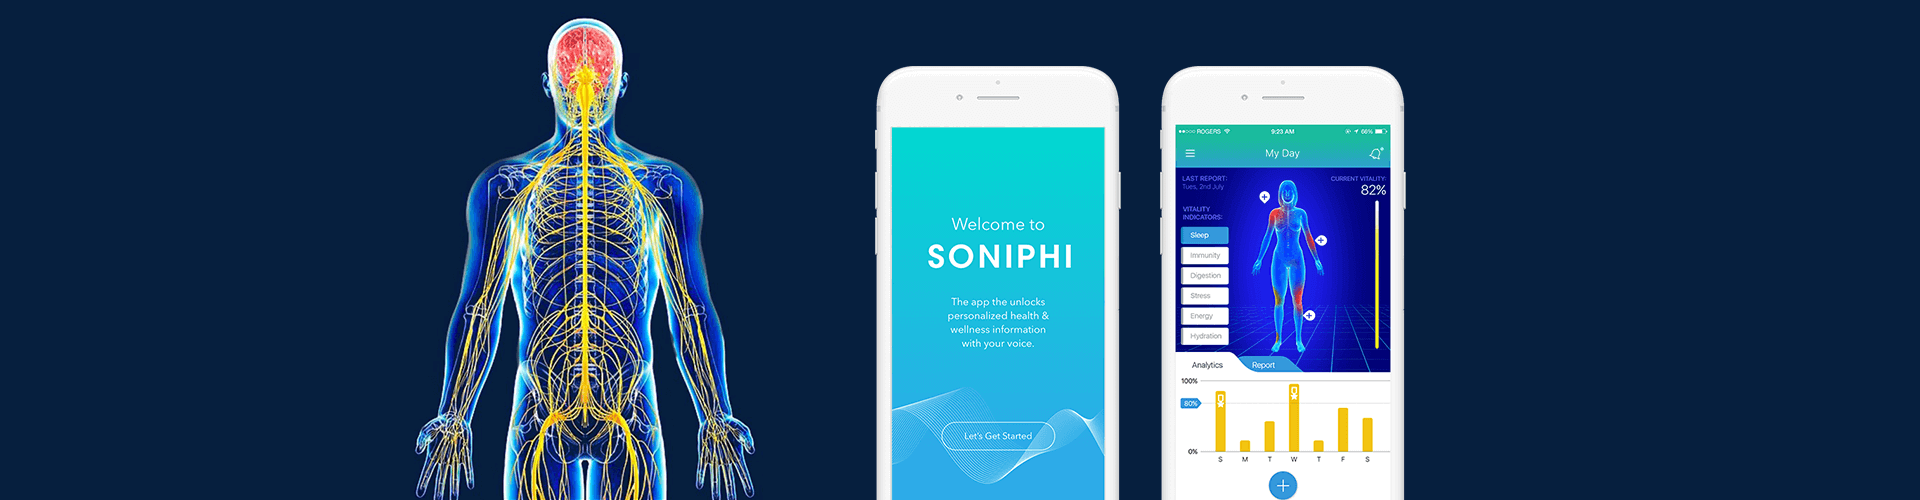 Soniphi Vitality Health App - Banner